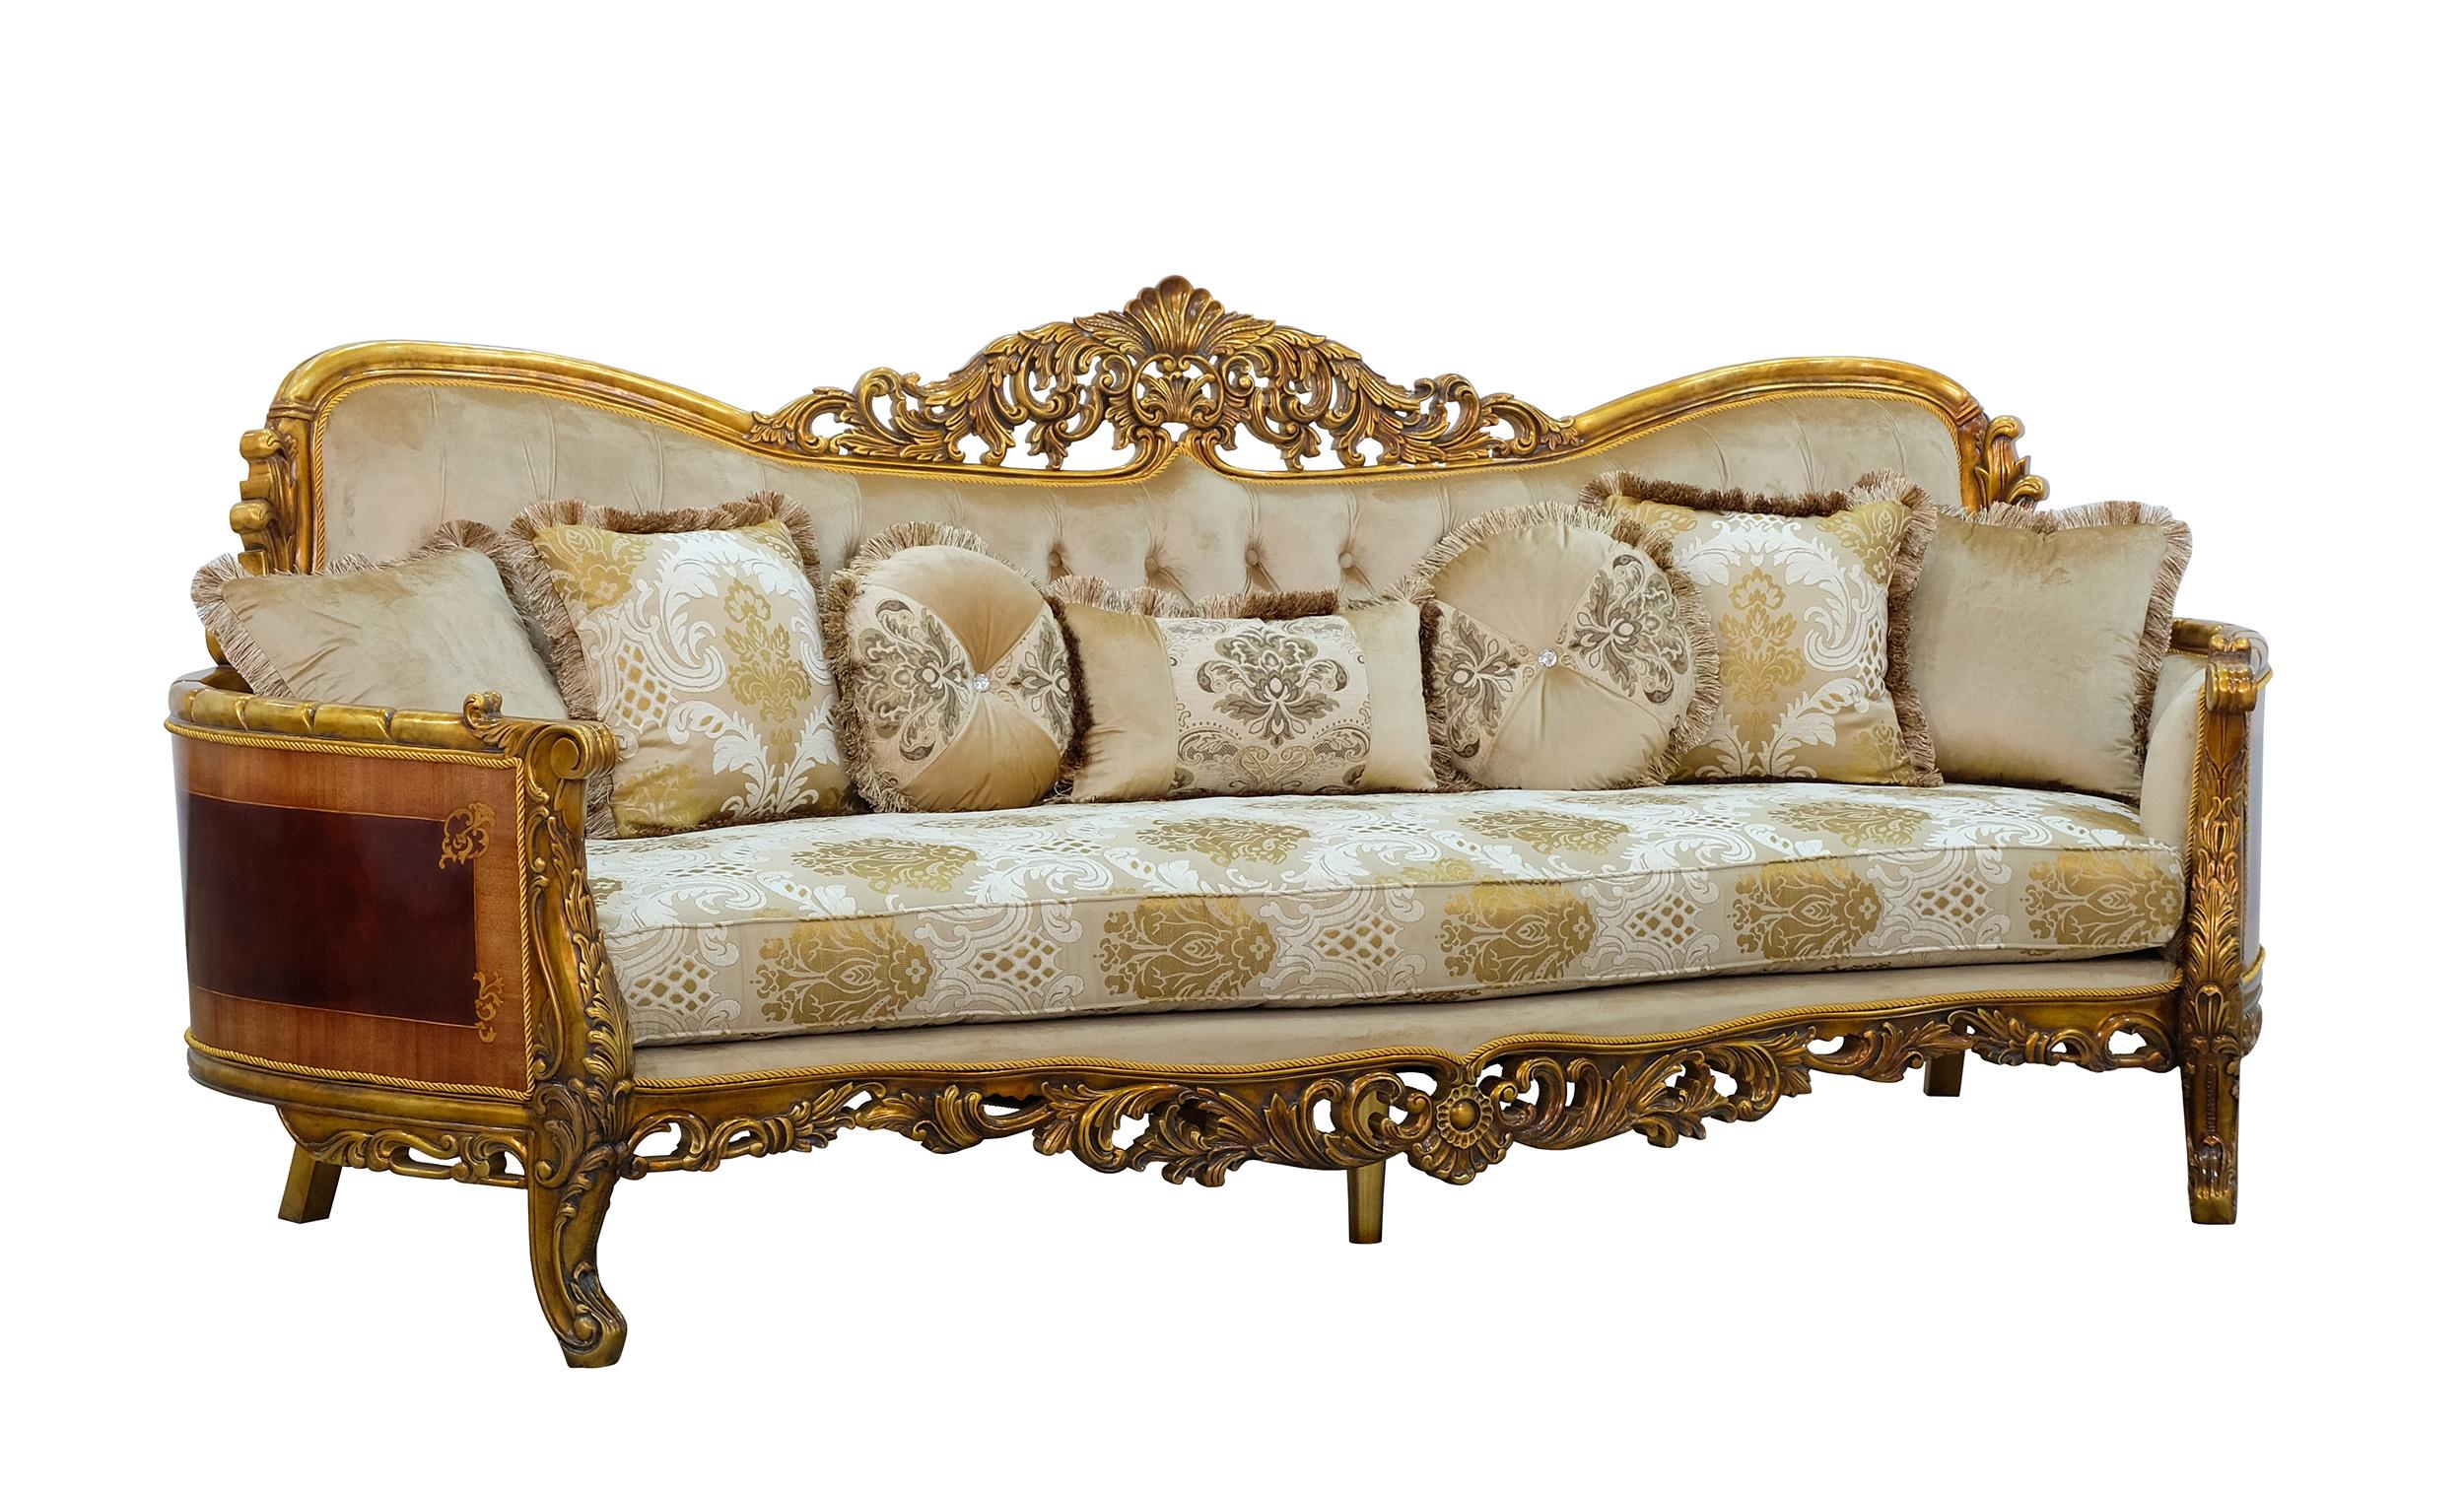 Classic, Traditional Sofa MAGGIOLINI 31055-S in Antique, Gold, Beige Fabric